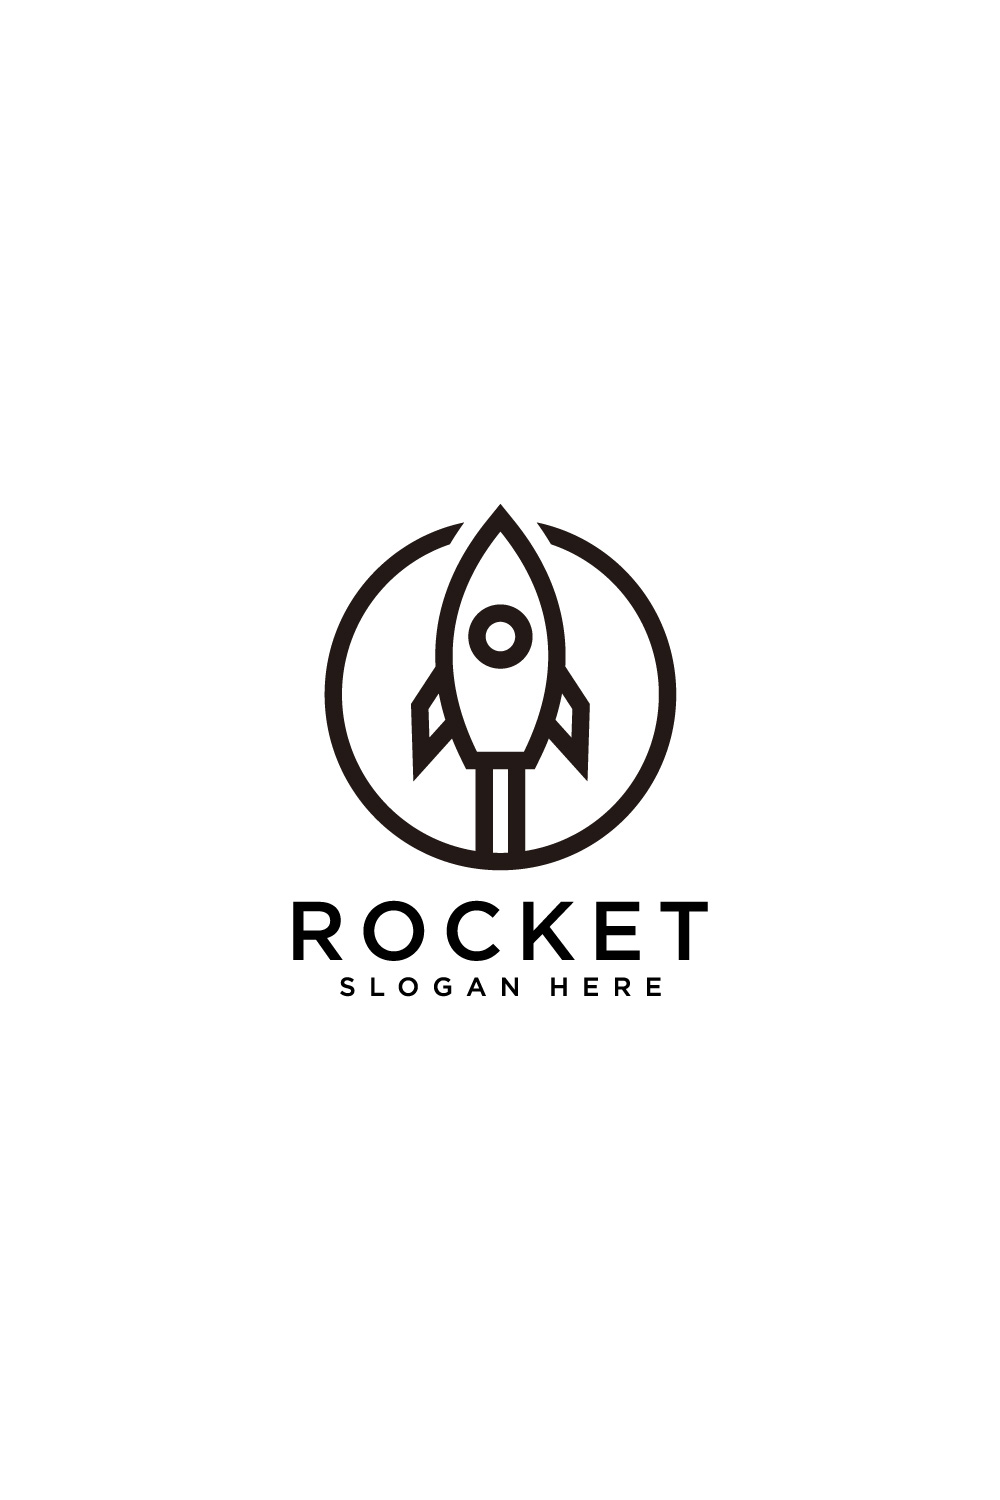 rocket launch logo vector design pinterest preview image.